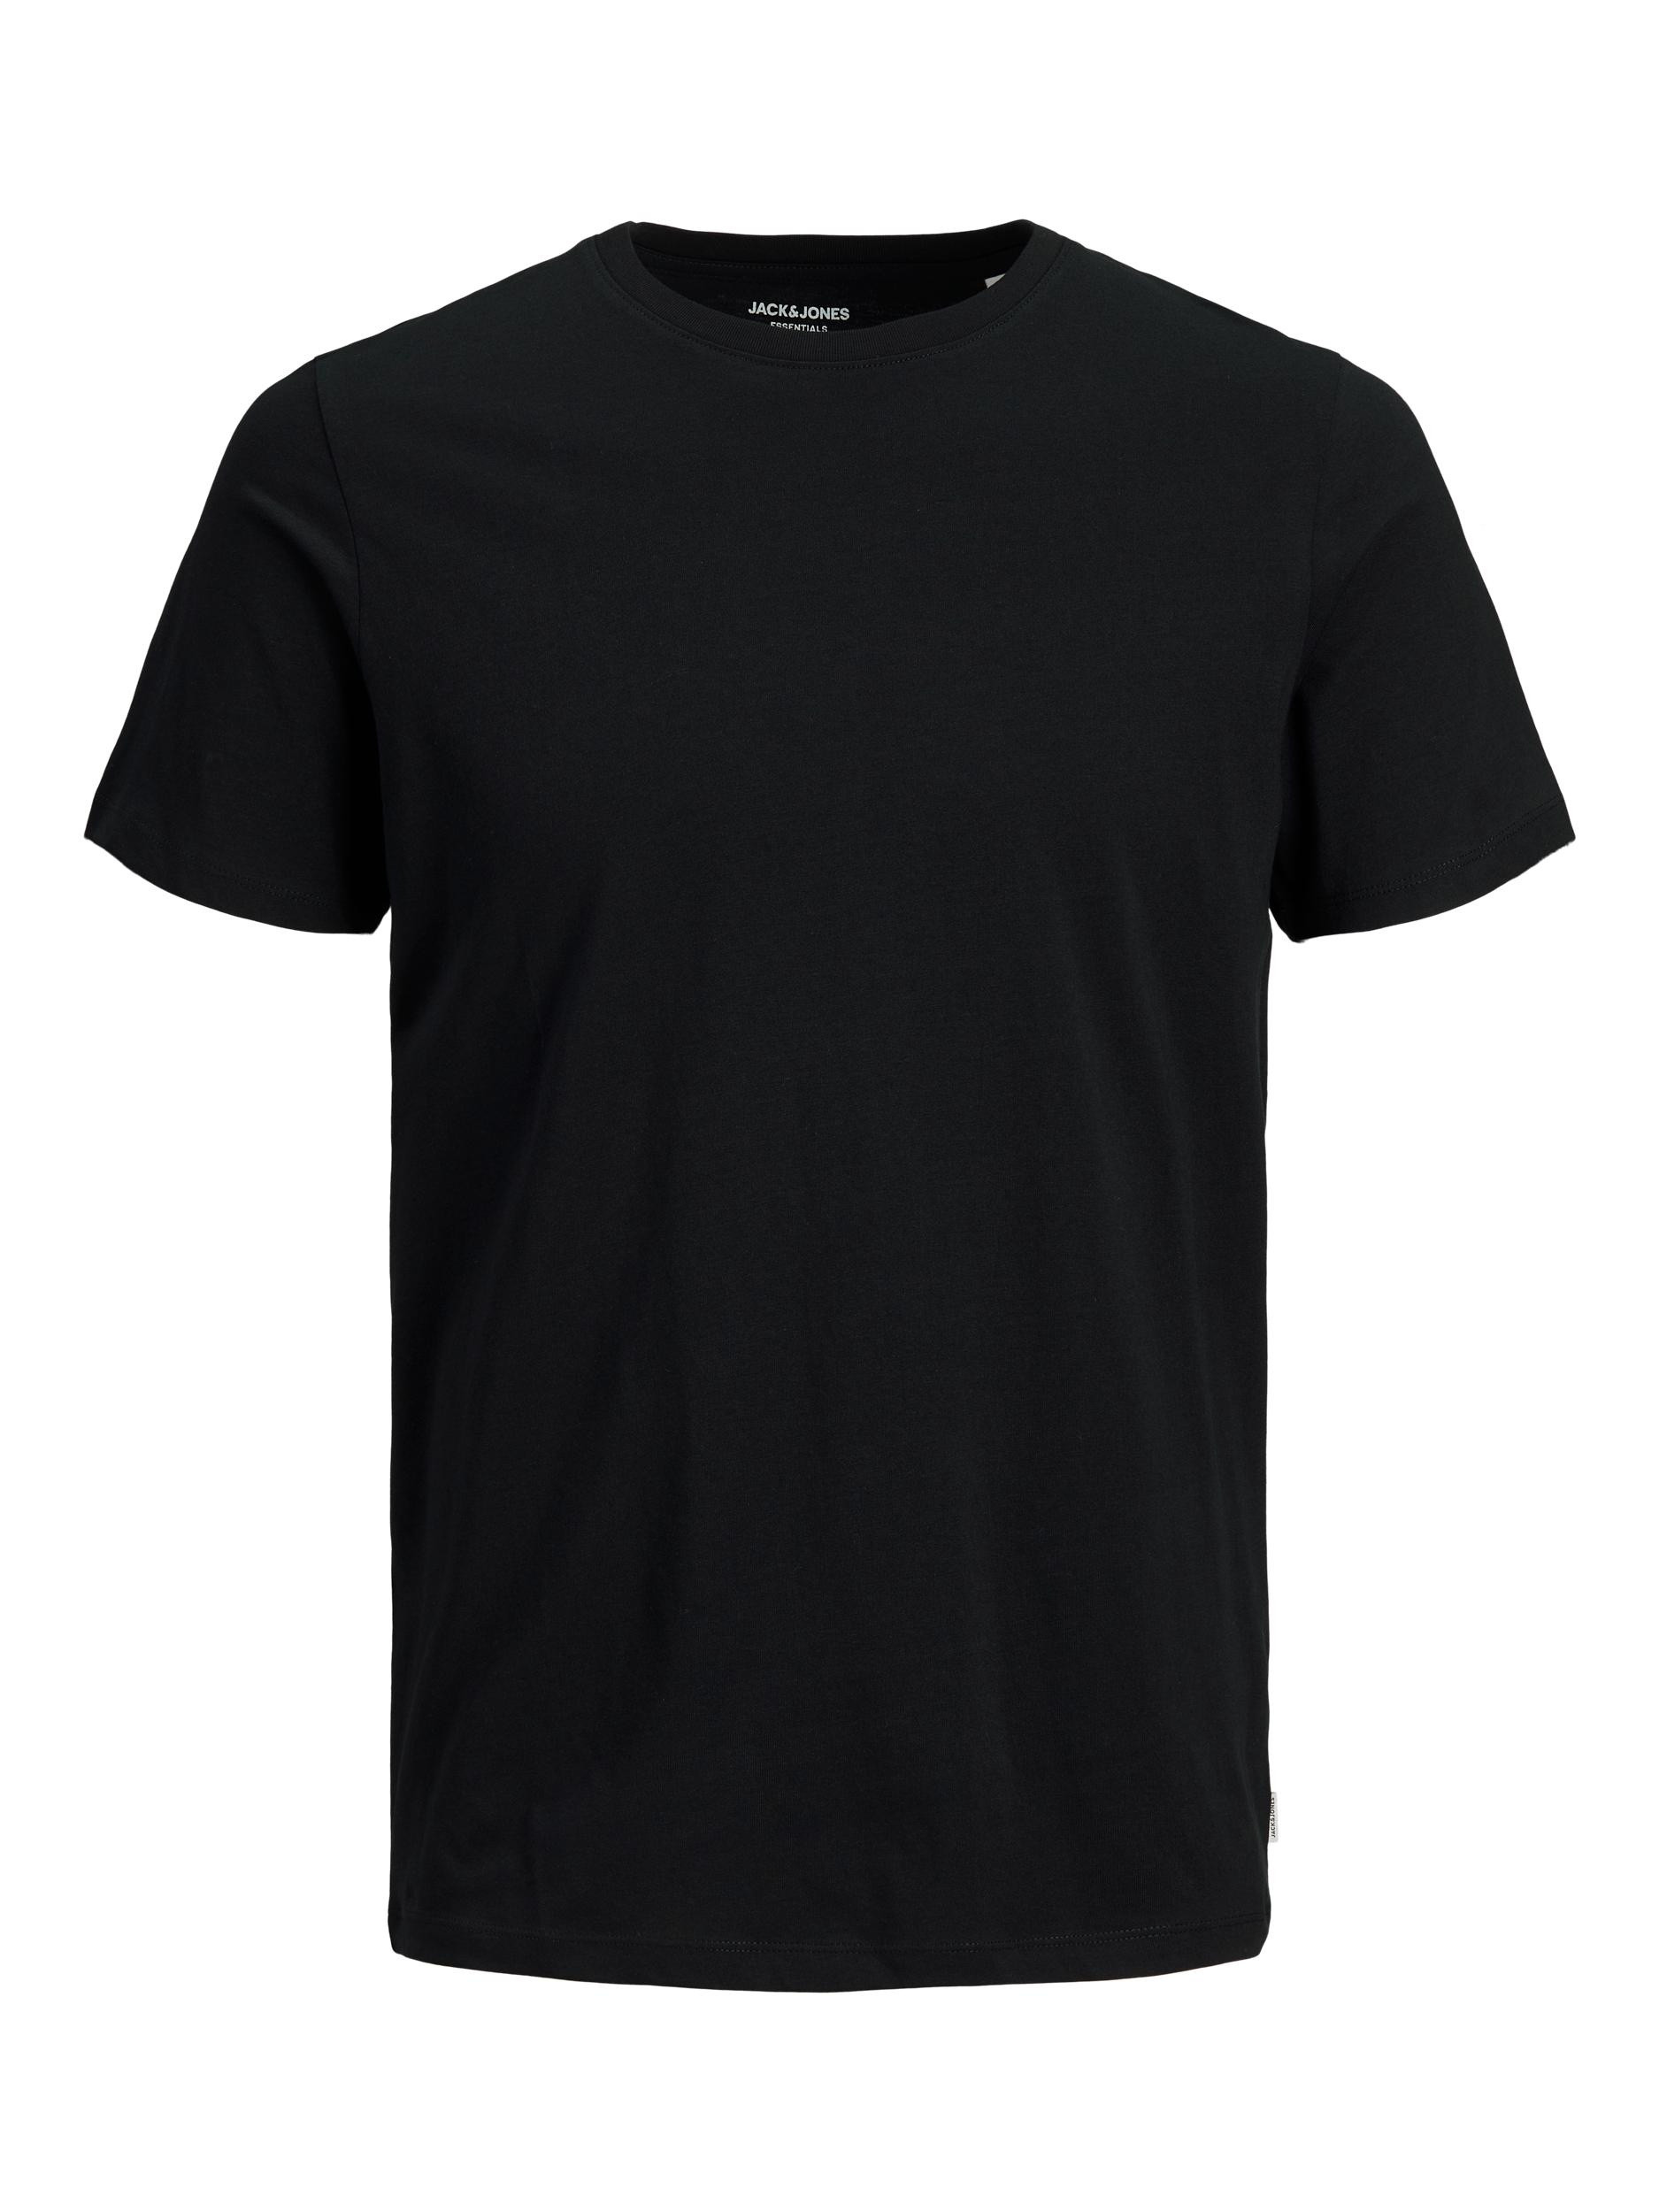 Jack & Jones - T-shirt in cotone, Nero, large image number 0